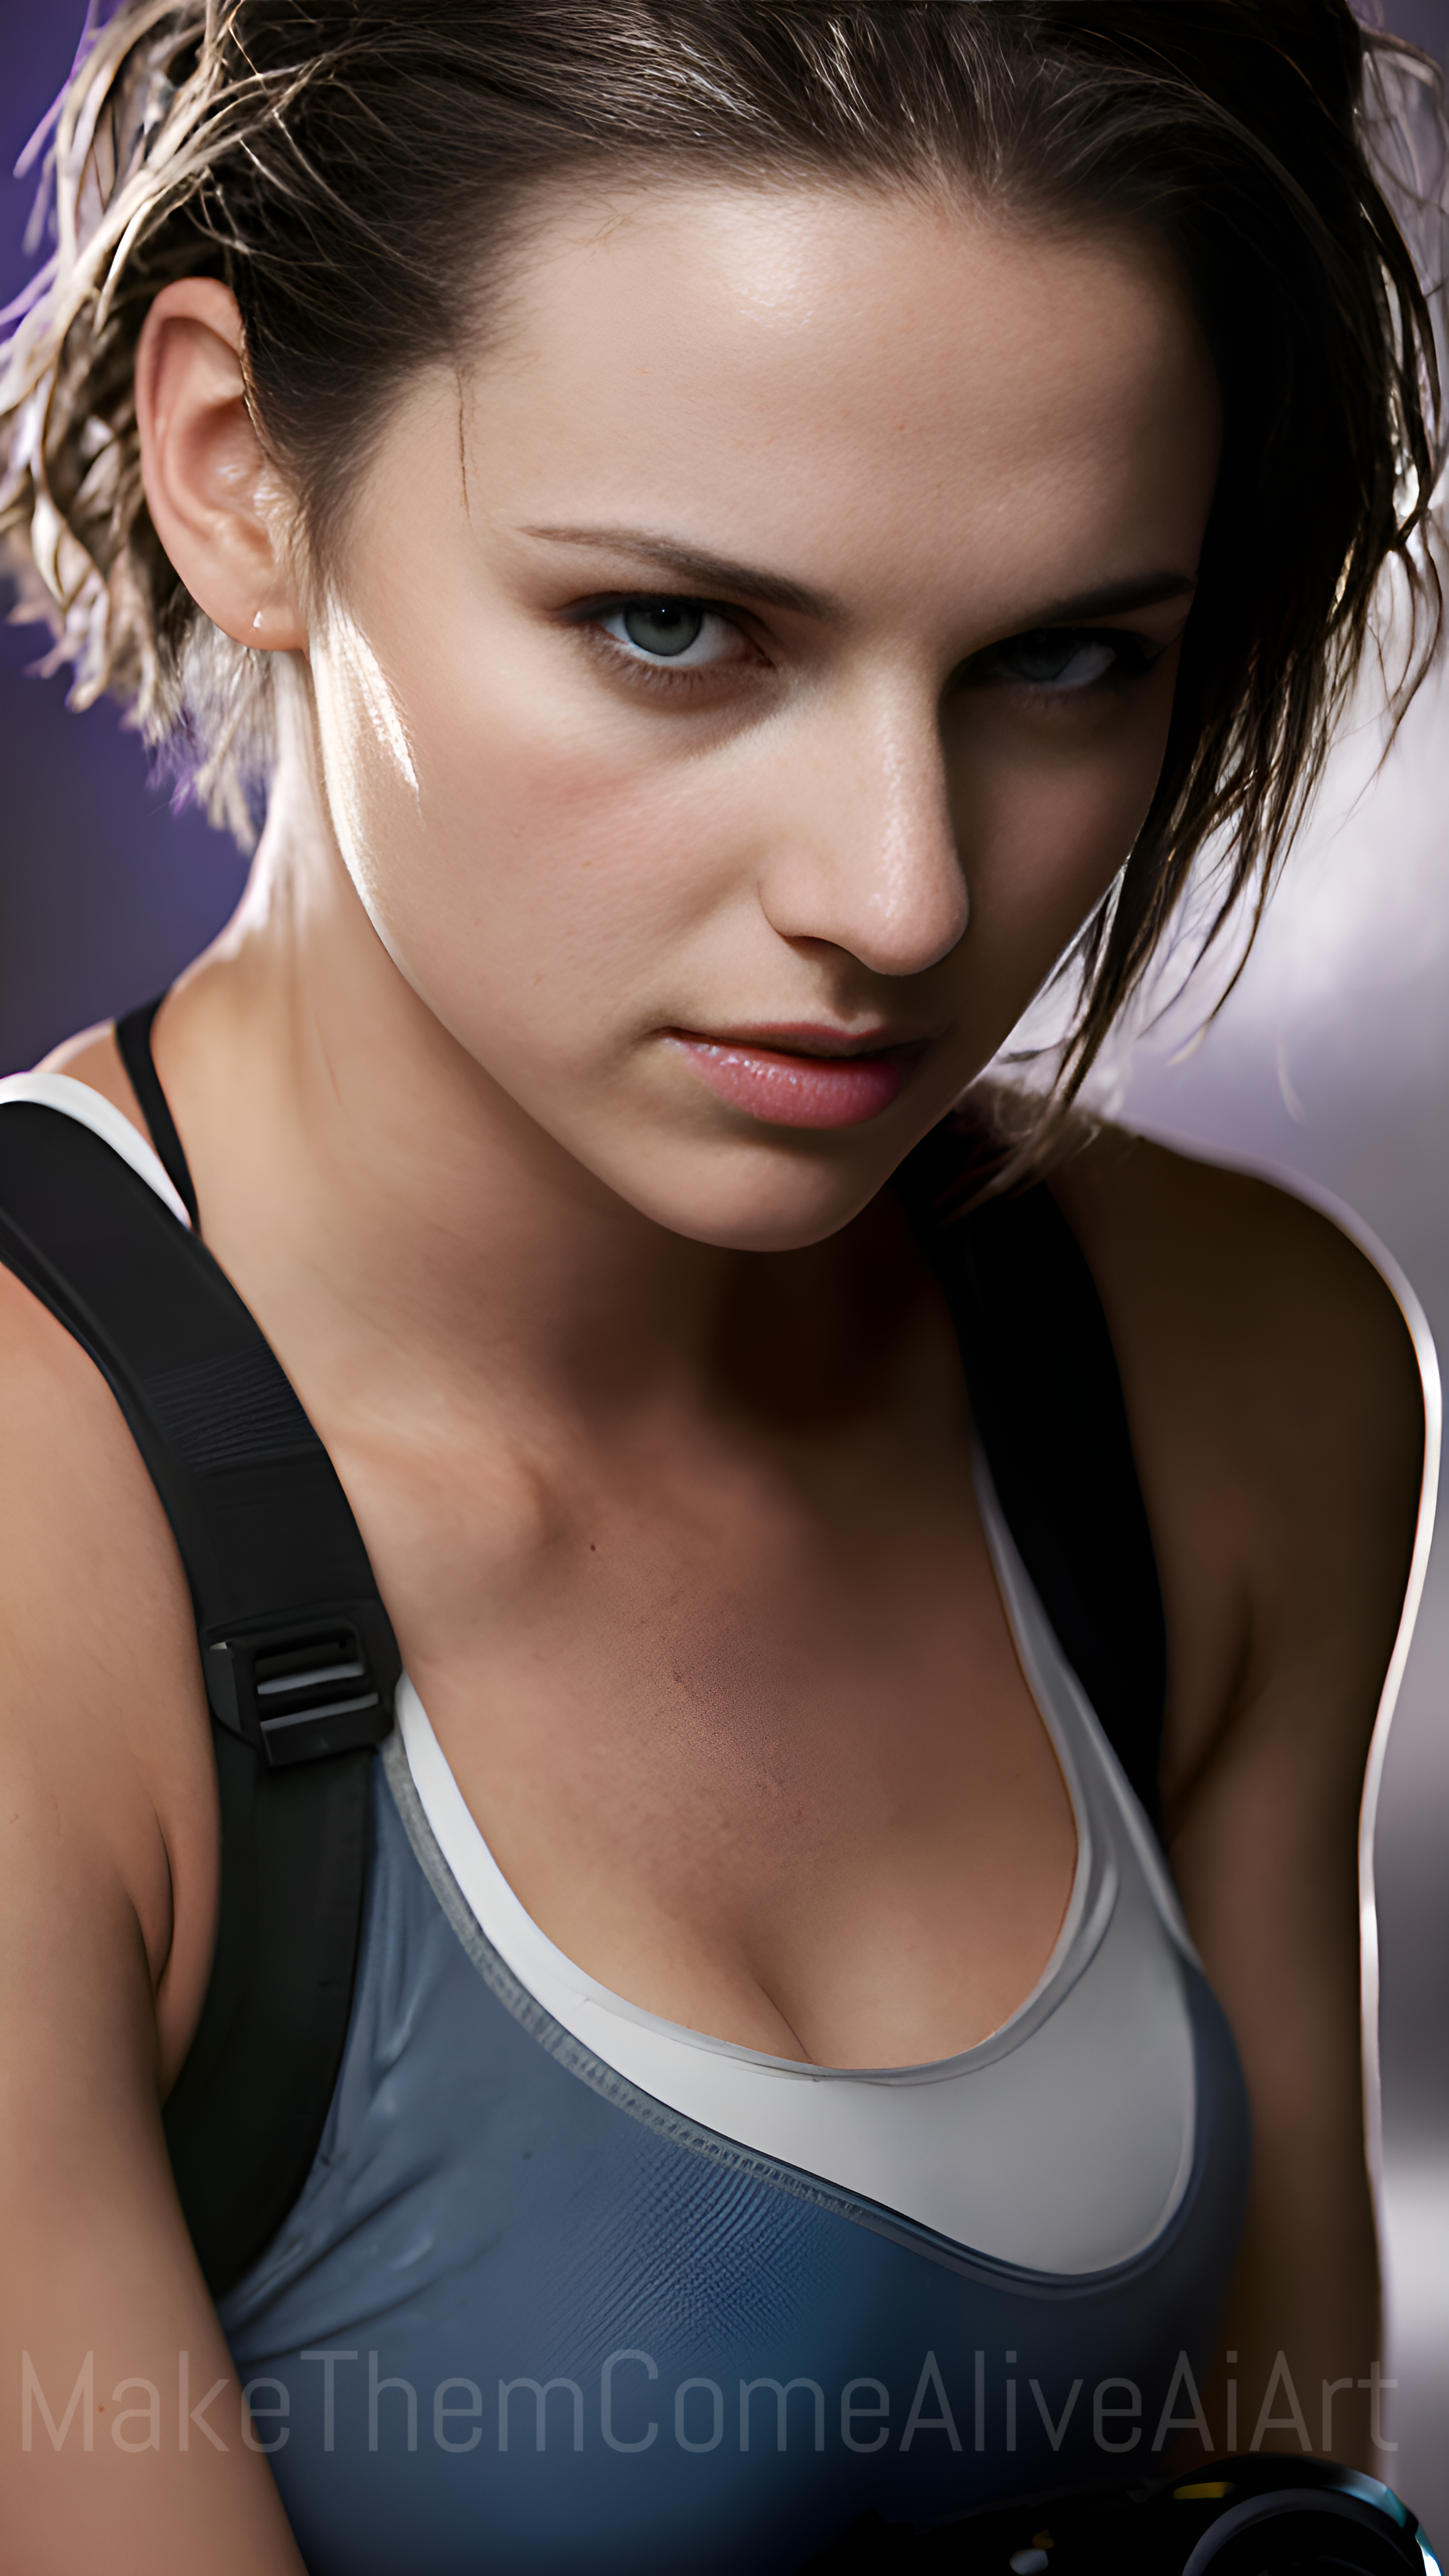 Jill Valentine (Resident Evil: Death island) by SynthPixel on